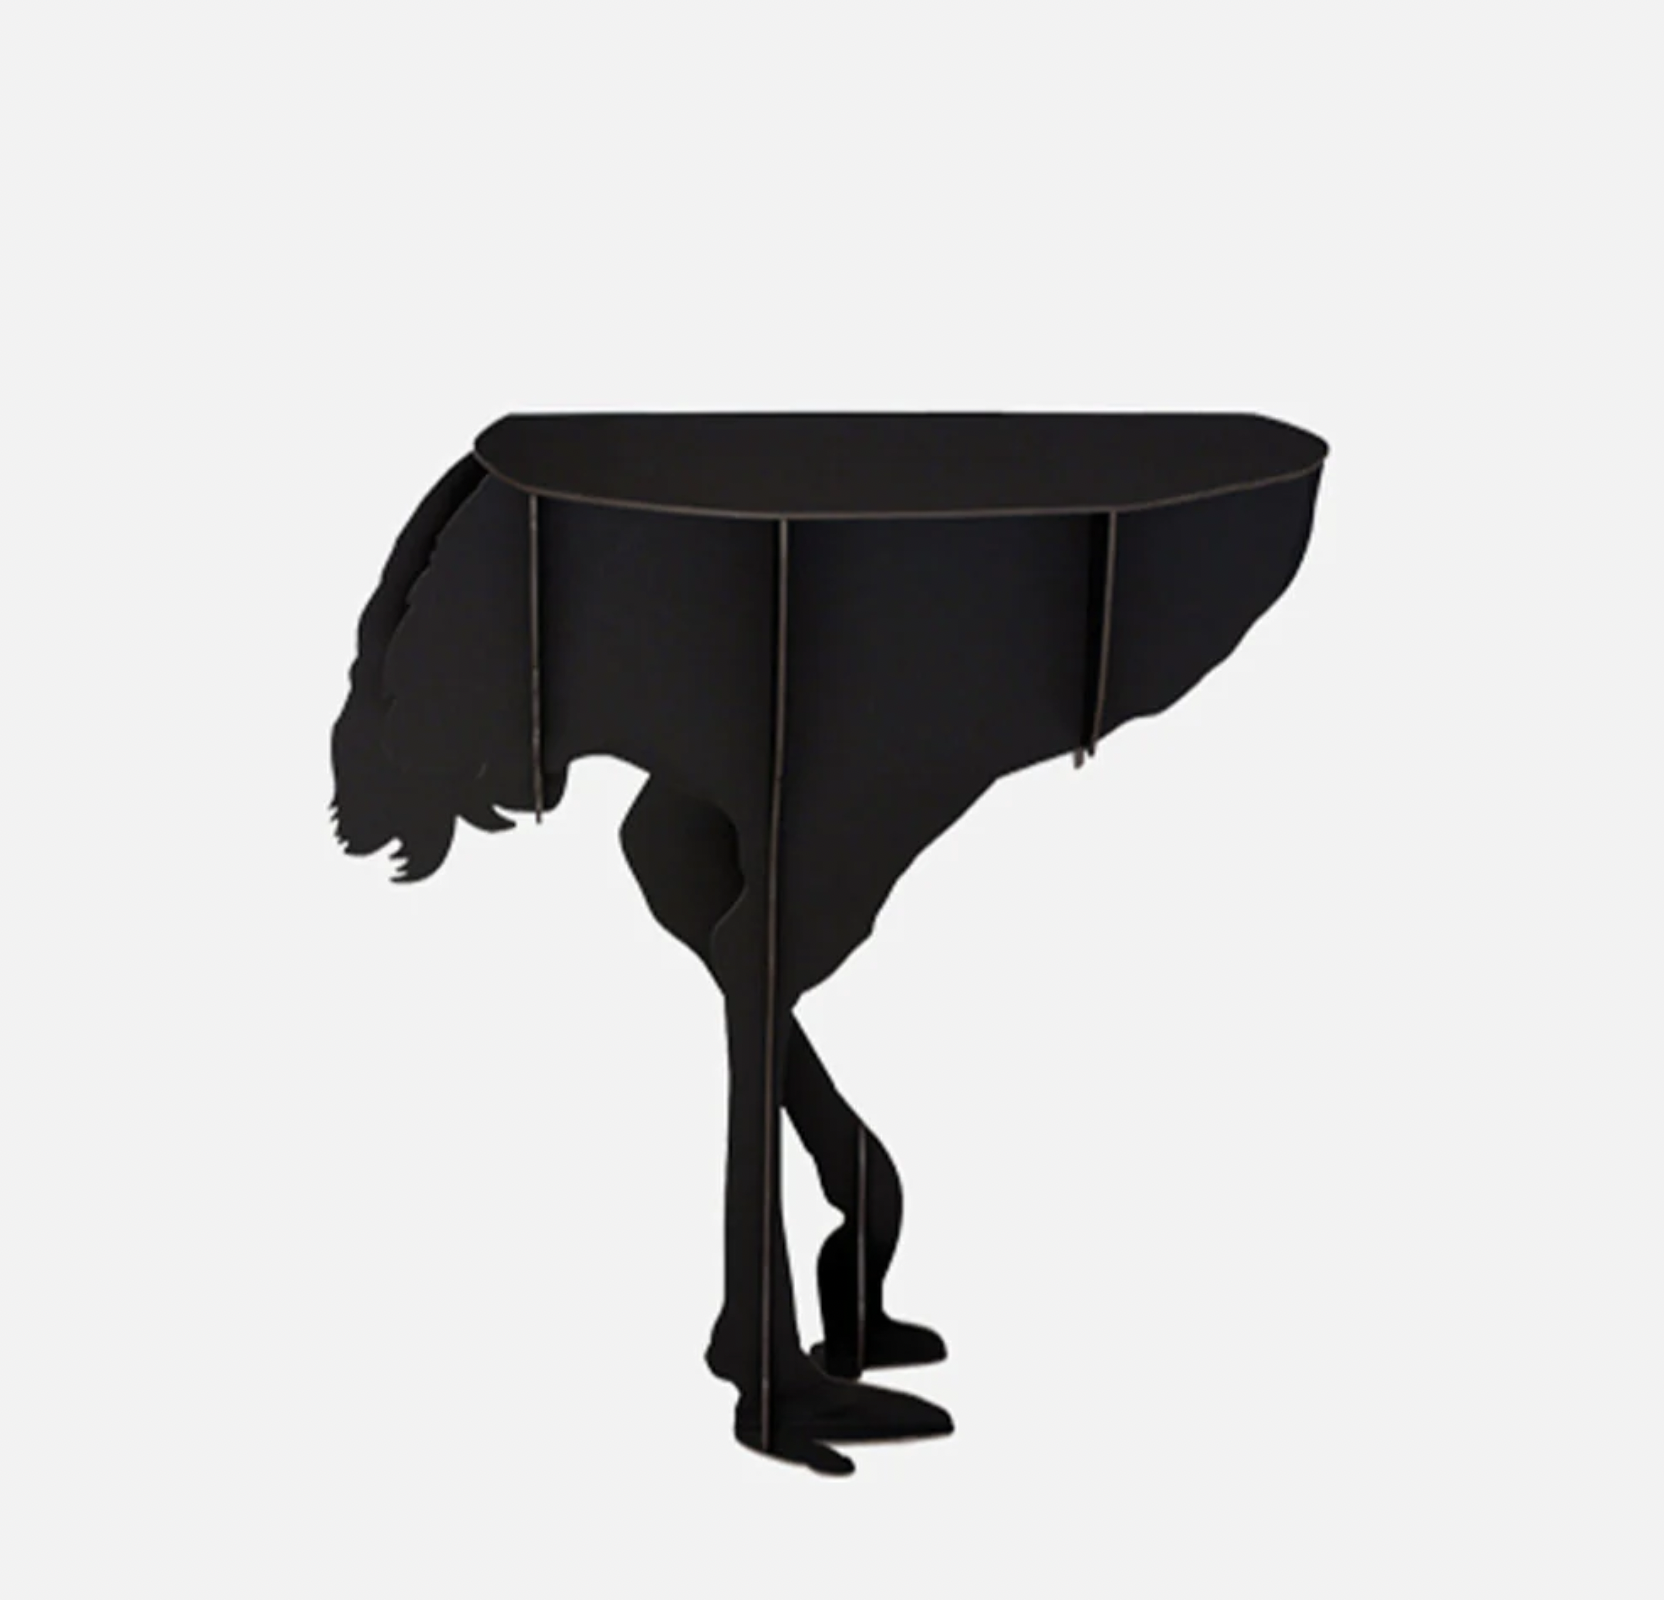 ostrich-wall-console-unique-furniture-quirky-design-animal-shape-hallway-console-black